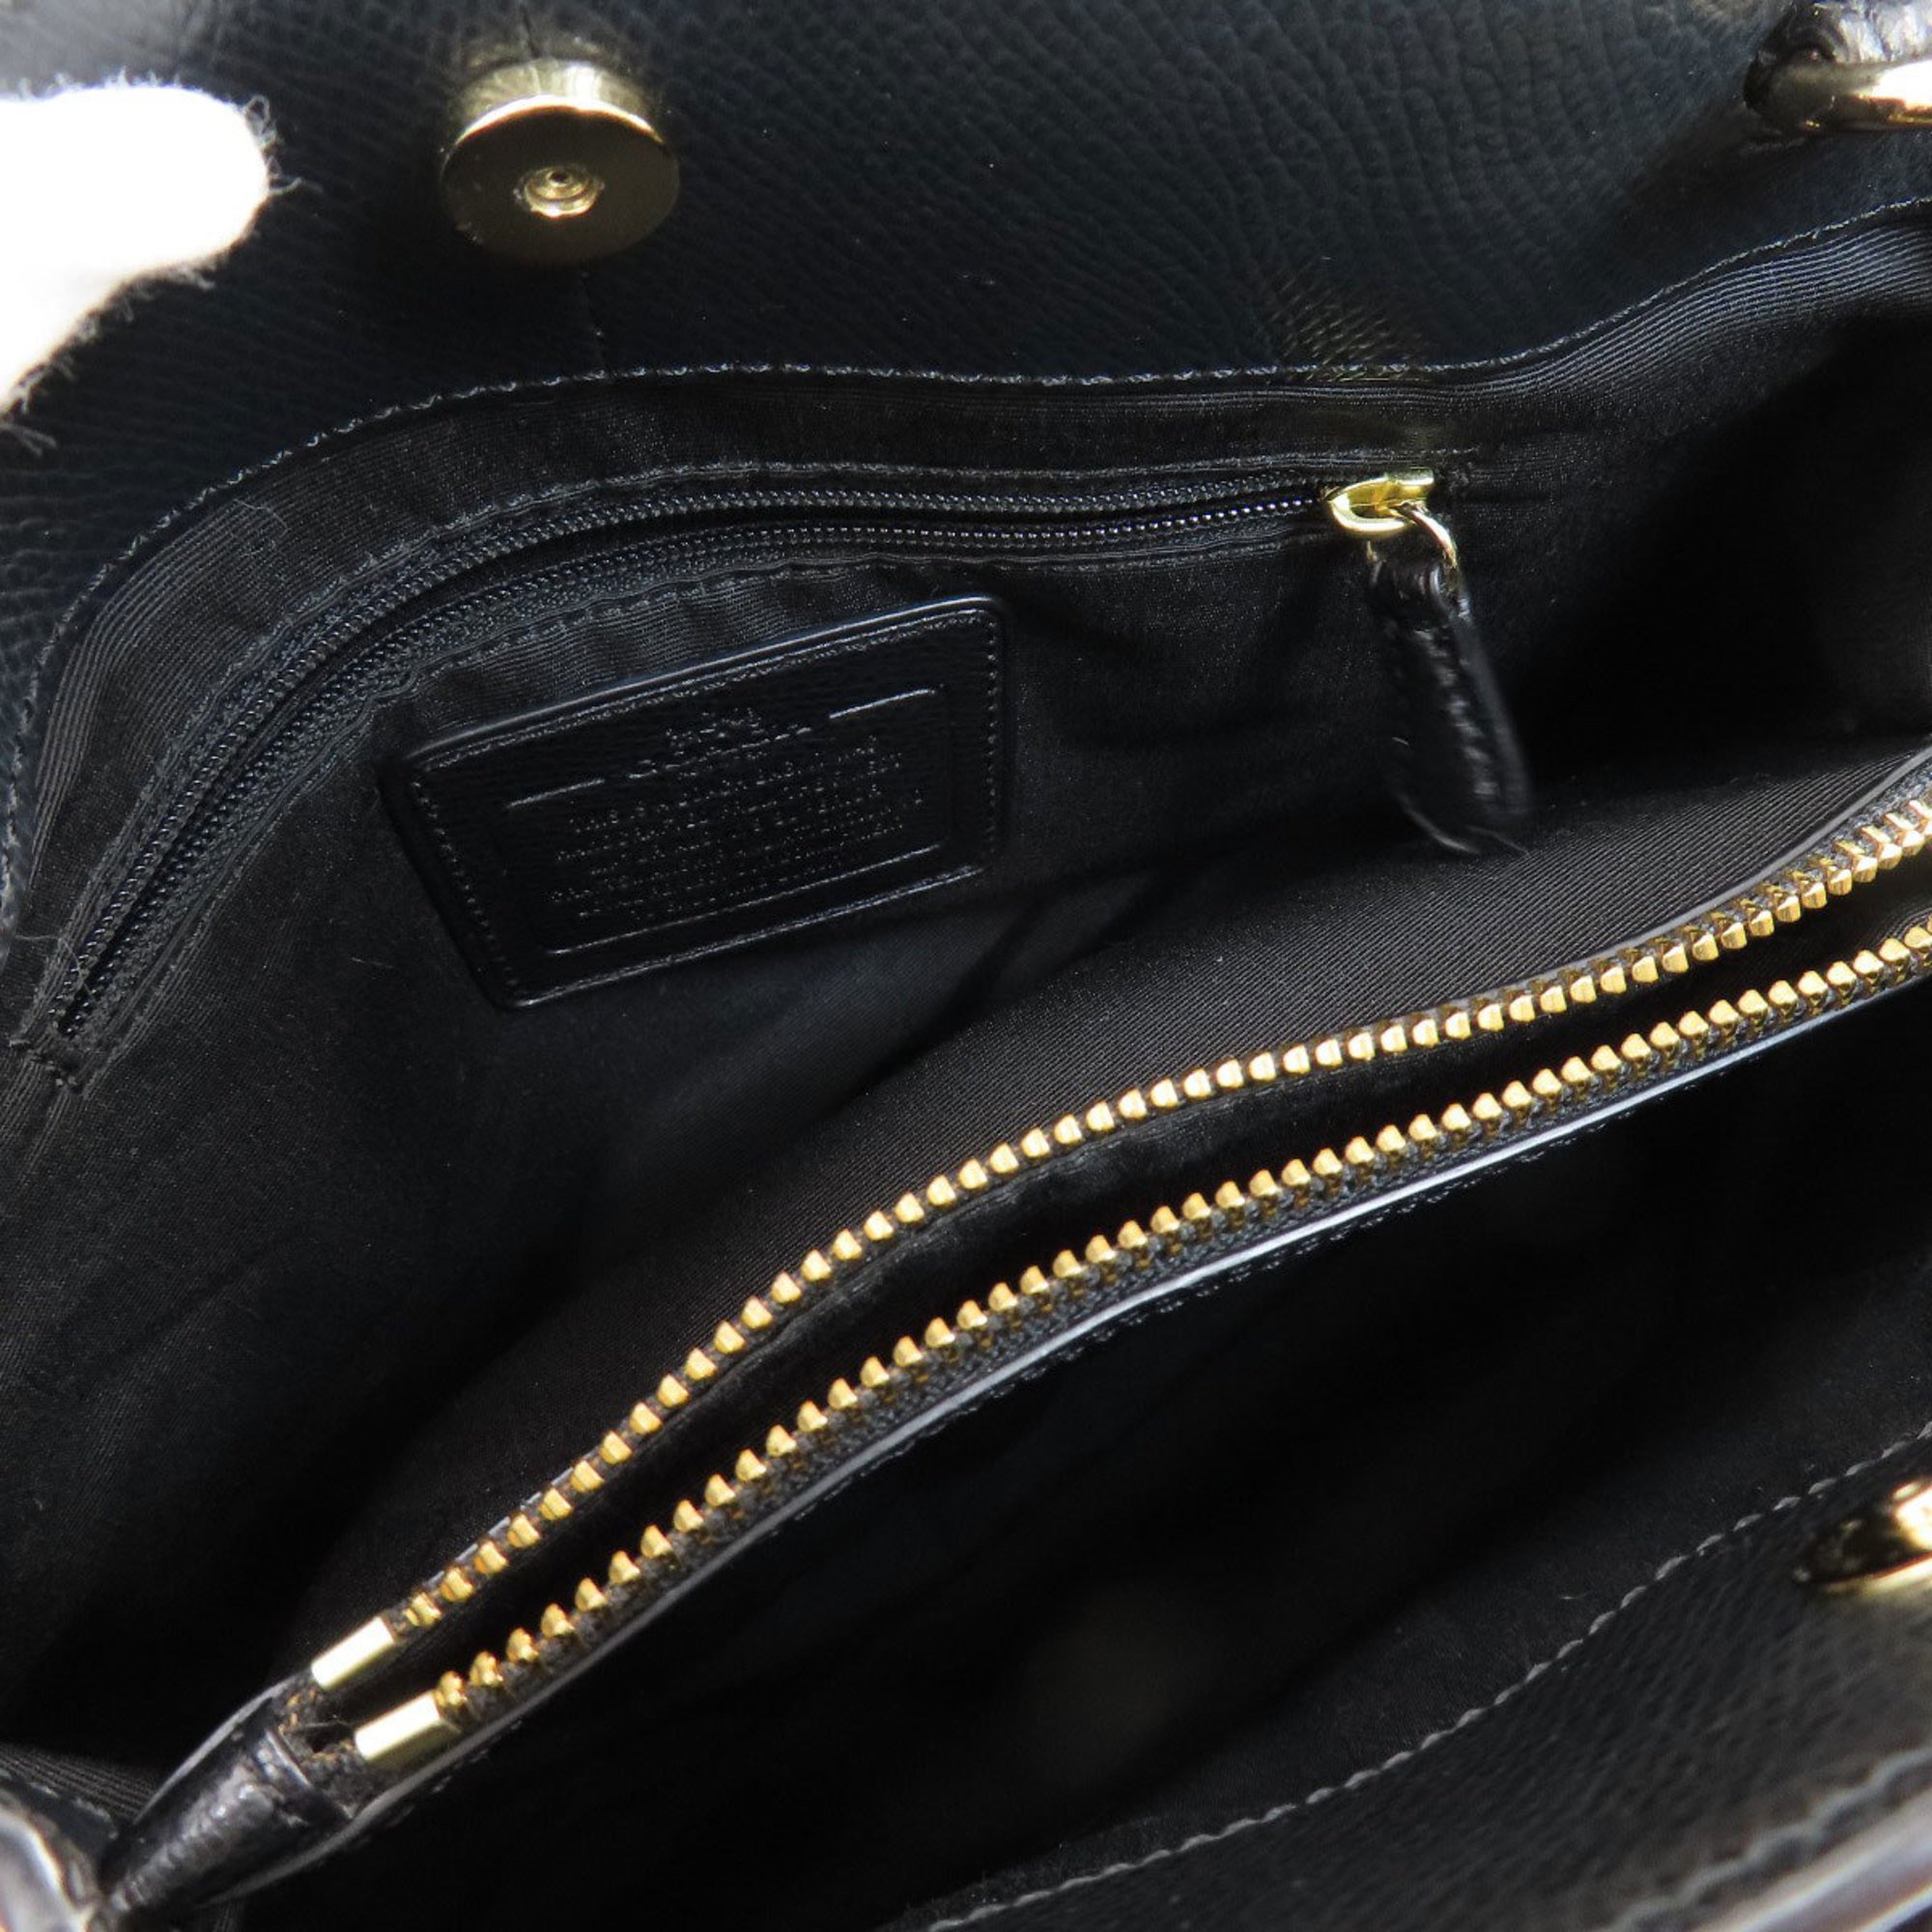 Coach F36212 Leopard Print Handbag for Women